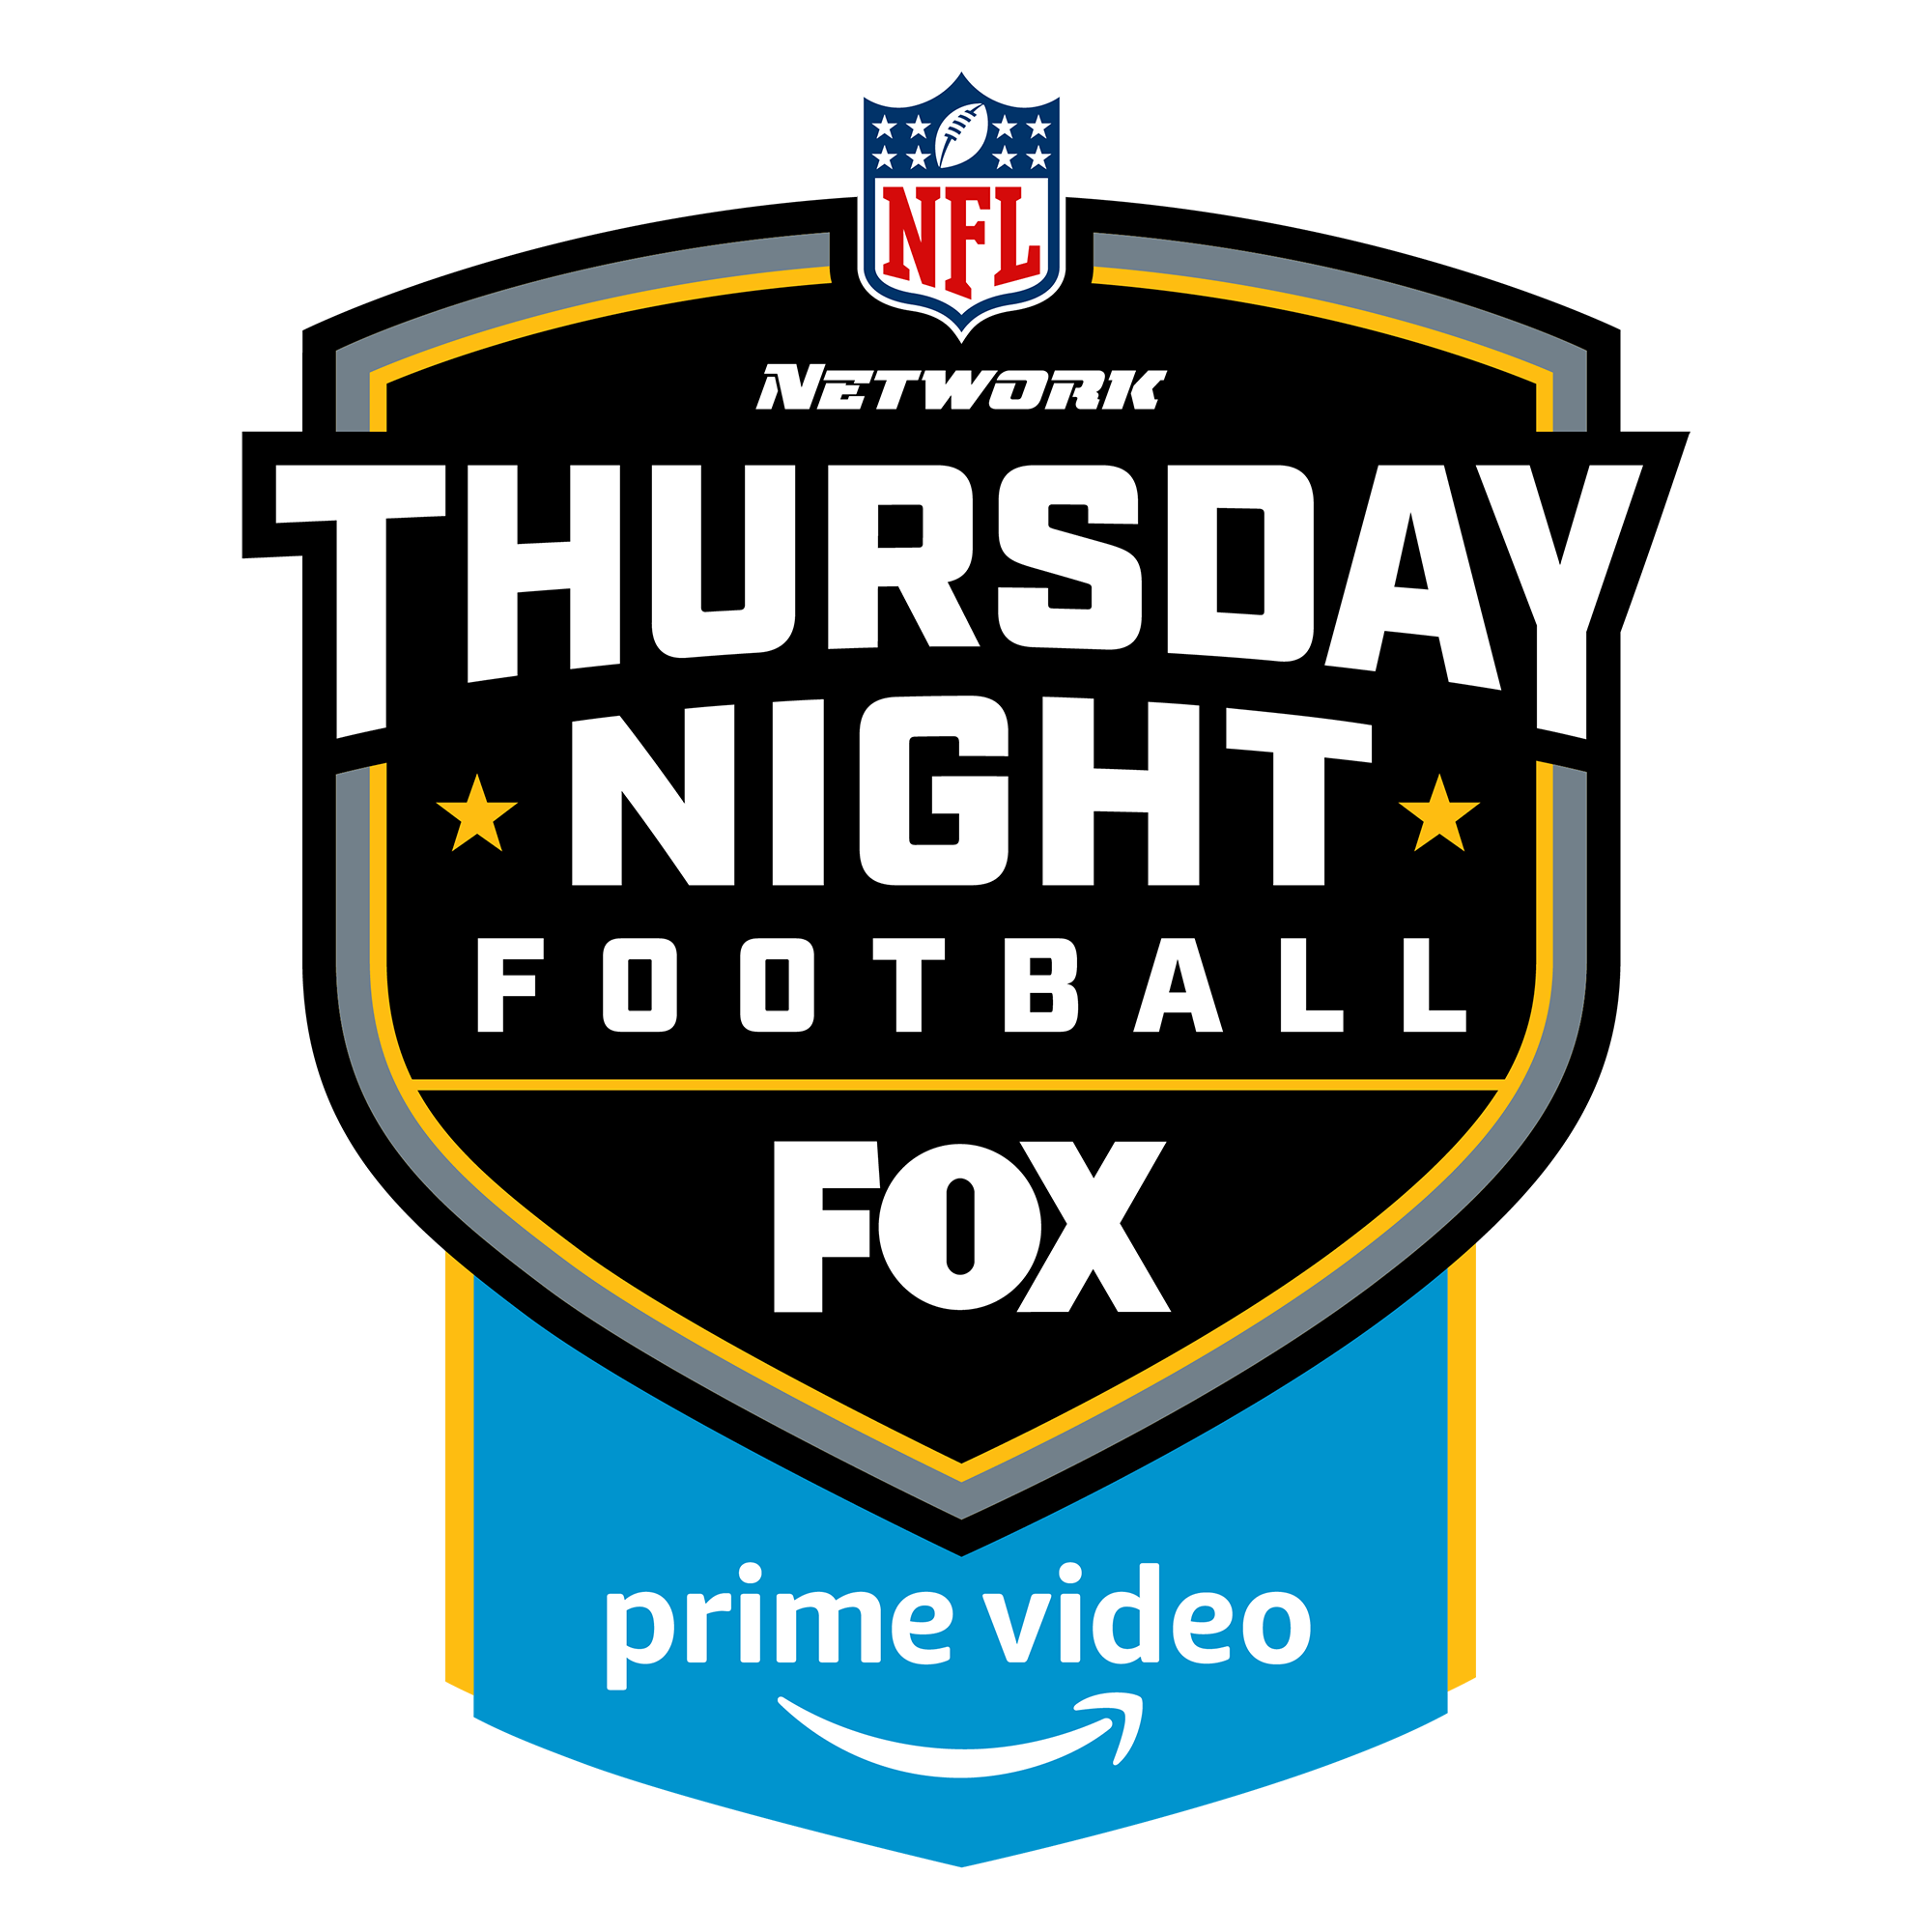 Monday Night Football Schedule 2022 Nfl 2021 - Super Bowl Schedule | Nfl.com